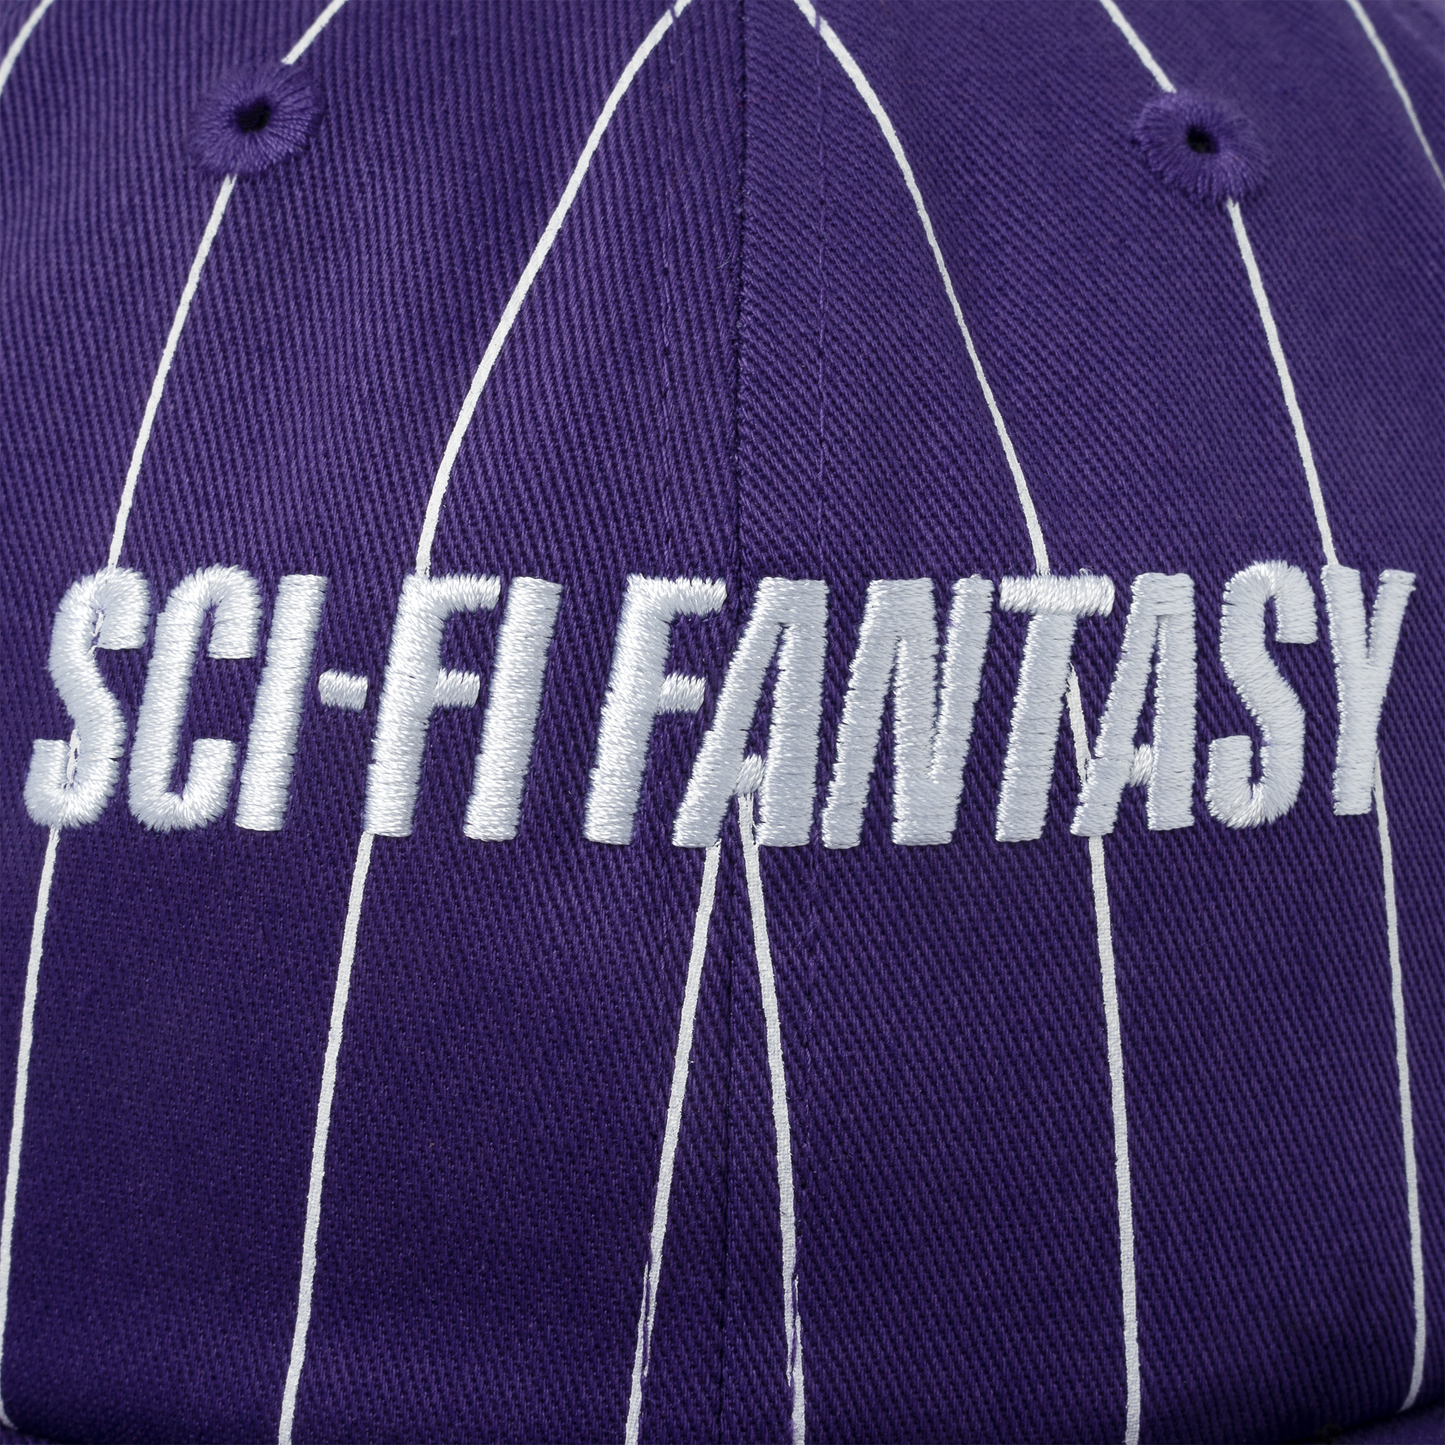 SCI-FI FANTASY - Fast Stripe Cap Purple